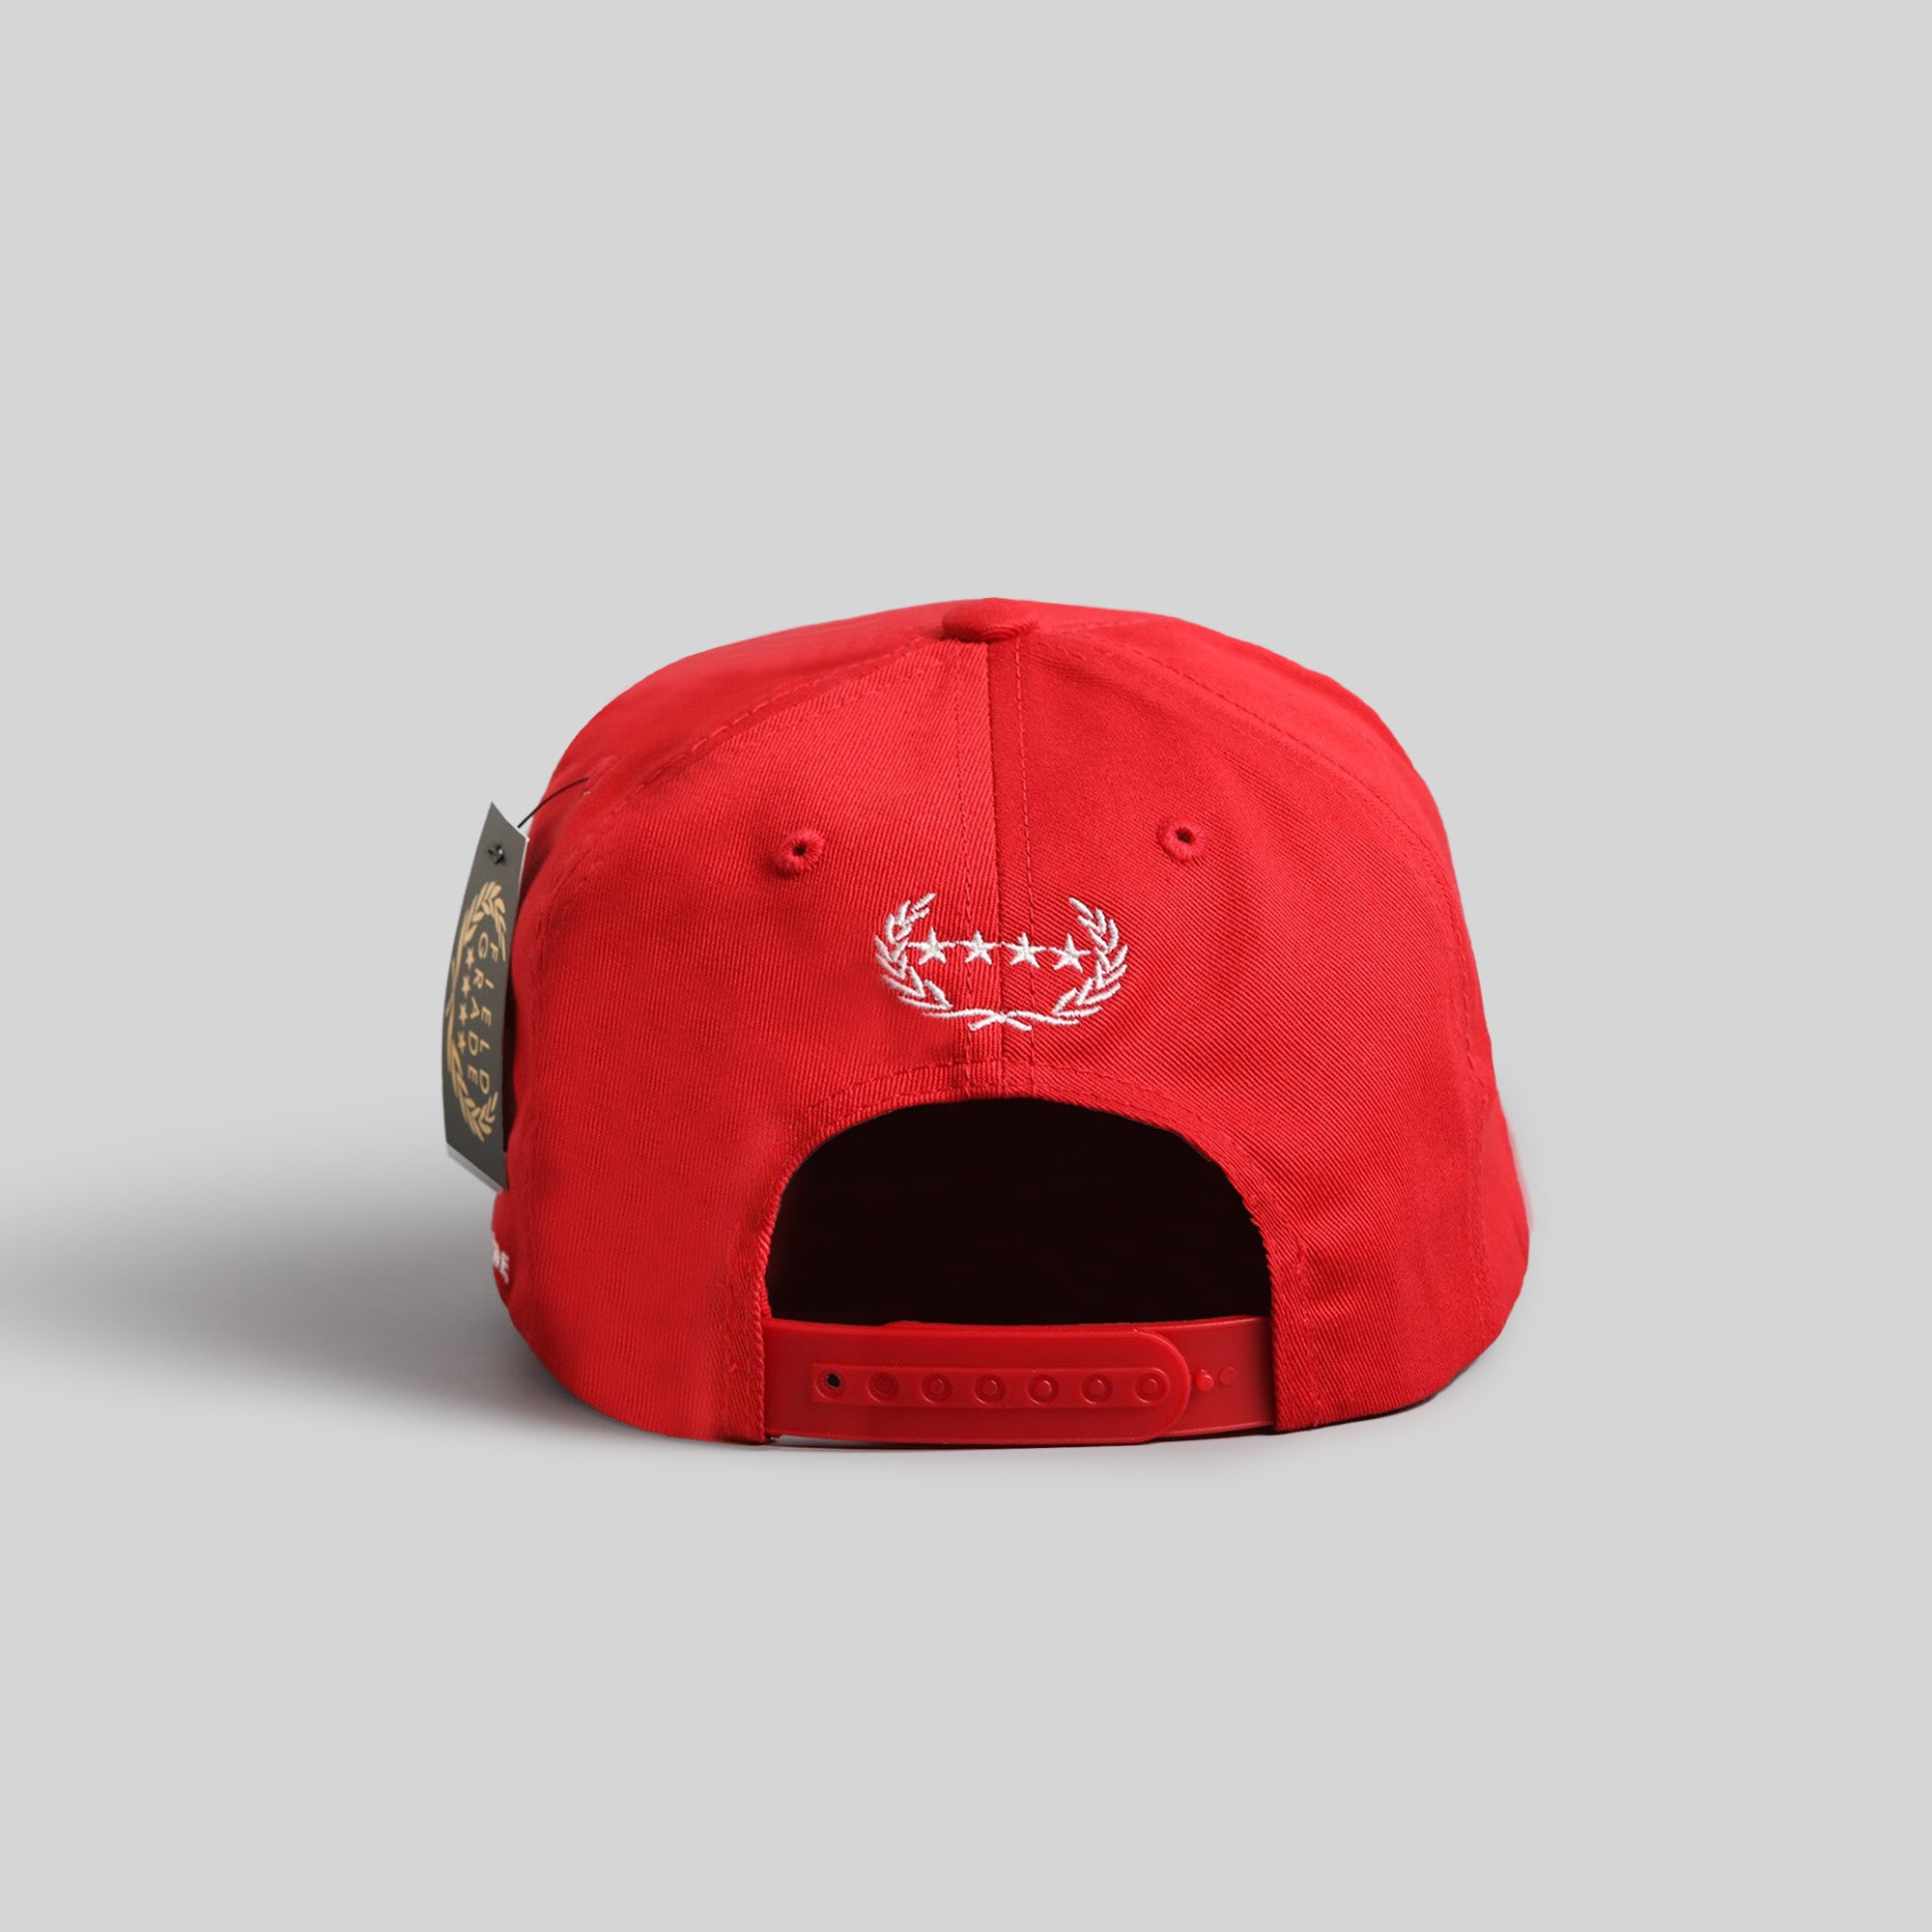 RESPECTFULLY VARSITY RED SNAPBACK HAT